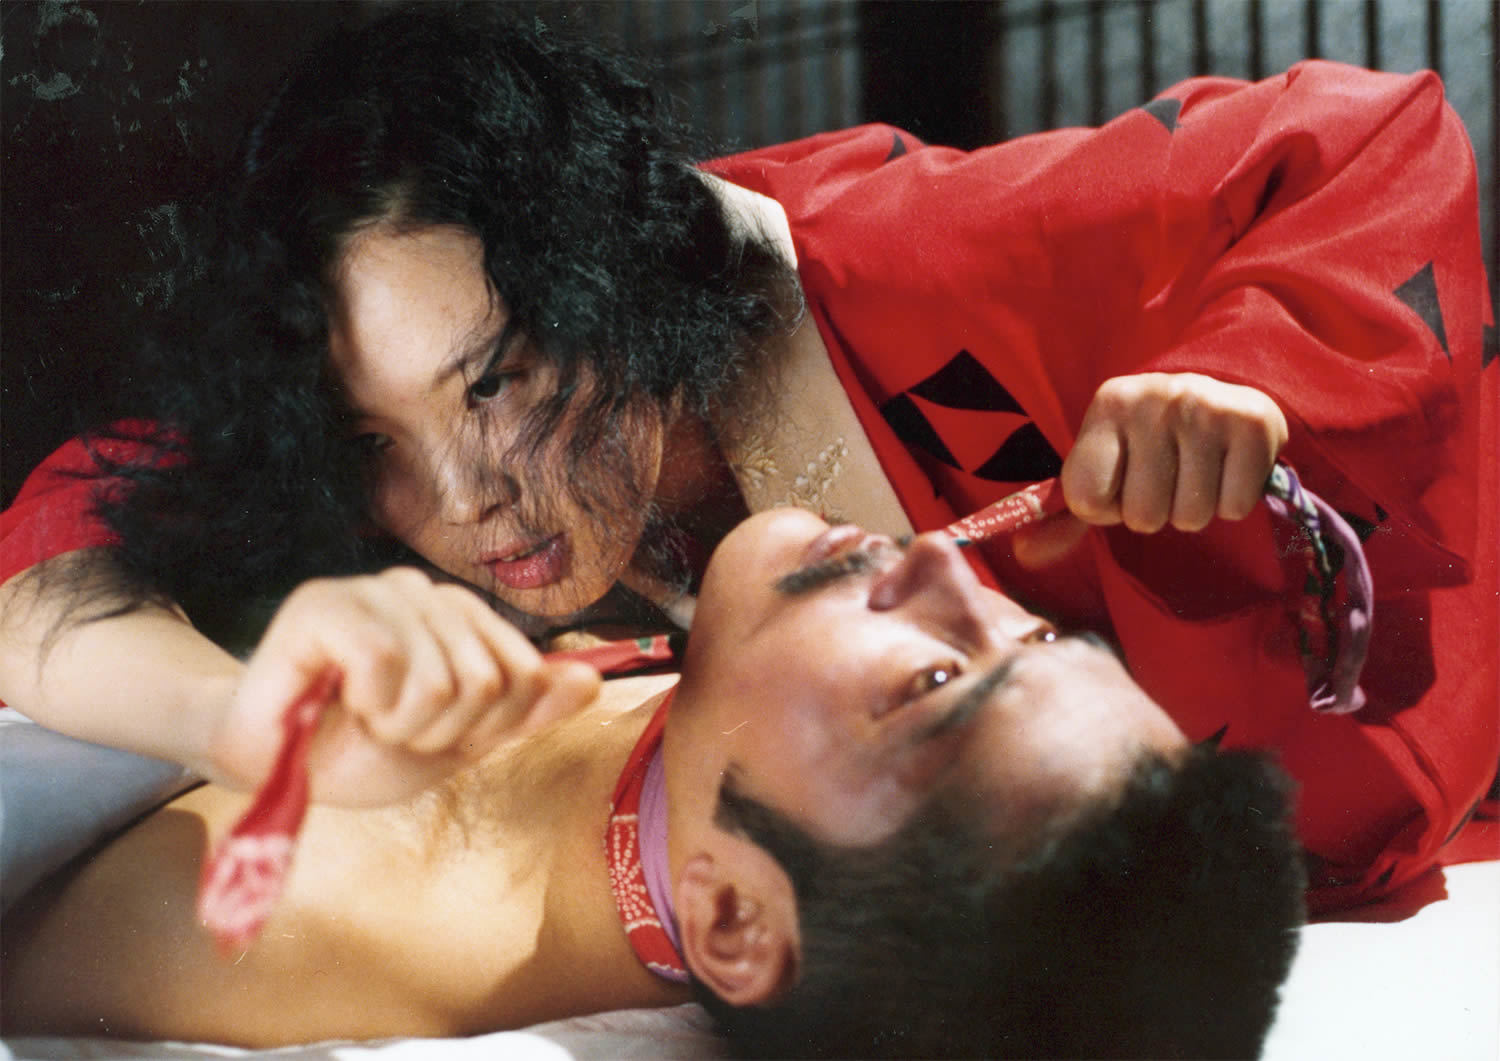 albert cullen share watch asian erotic movies photos